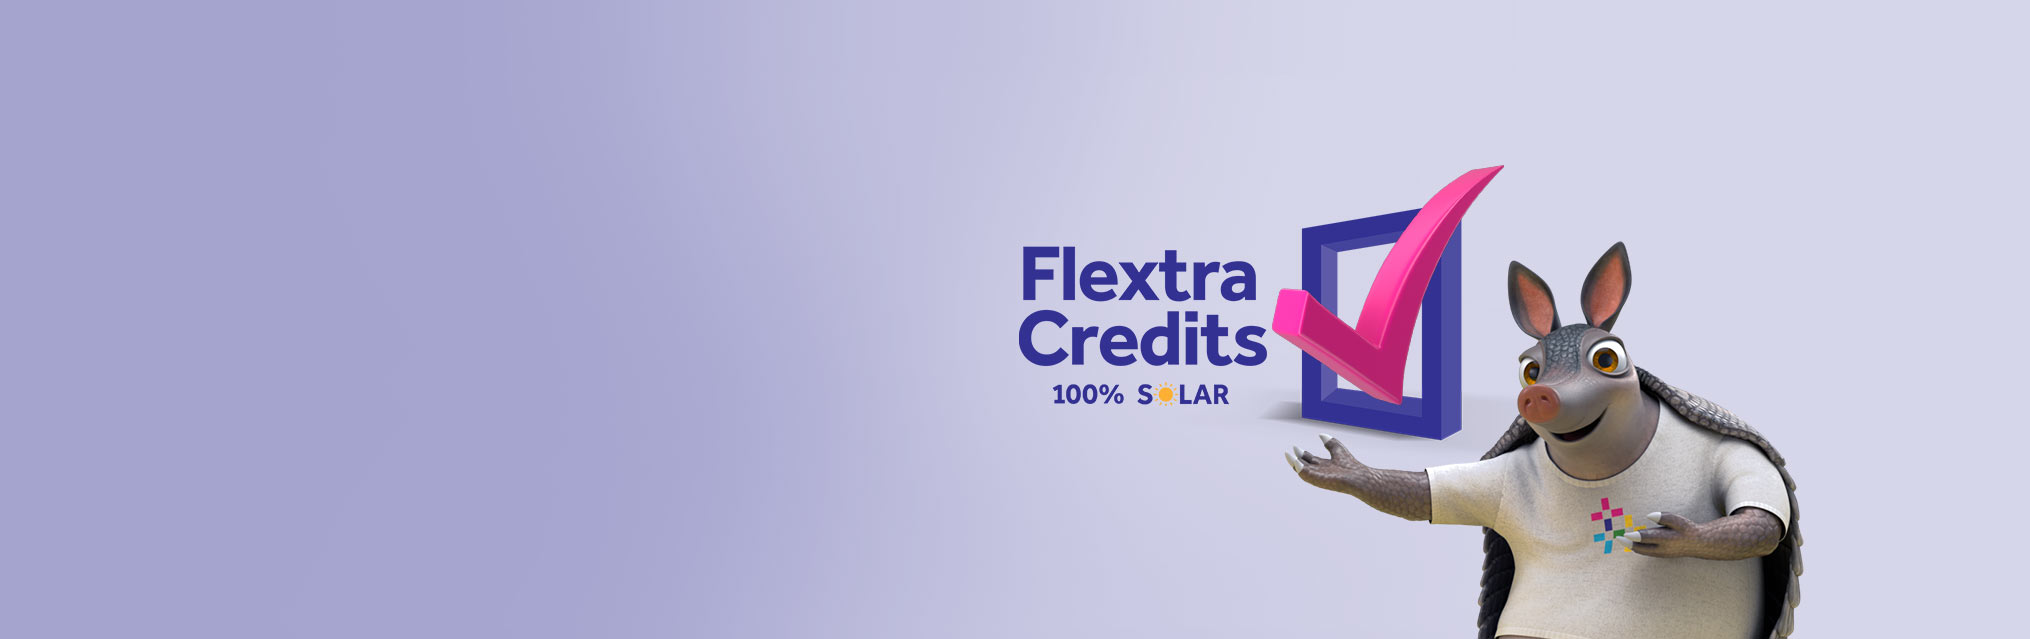 Flextra Credits 100% Solar
